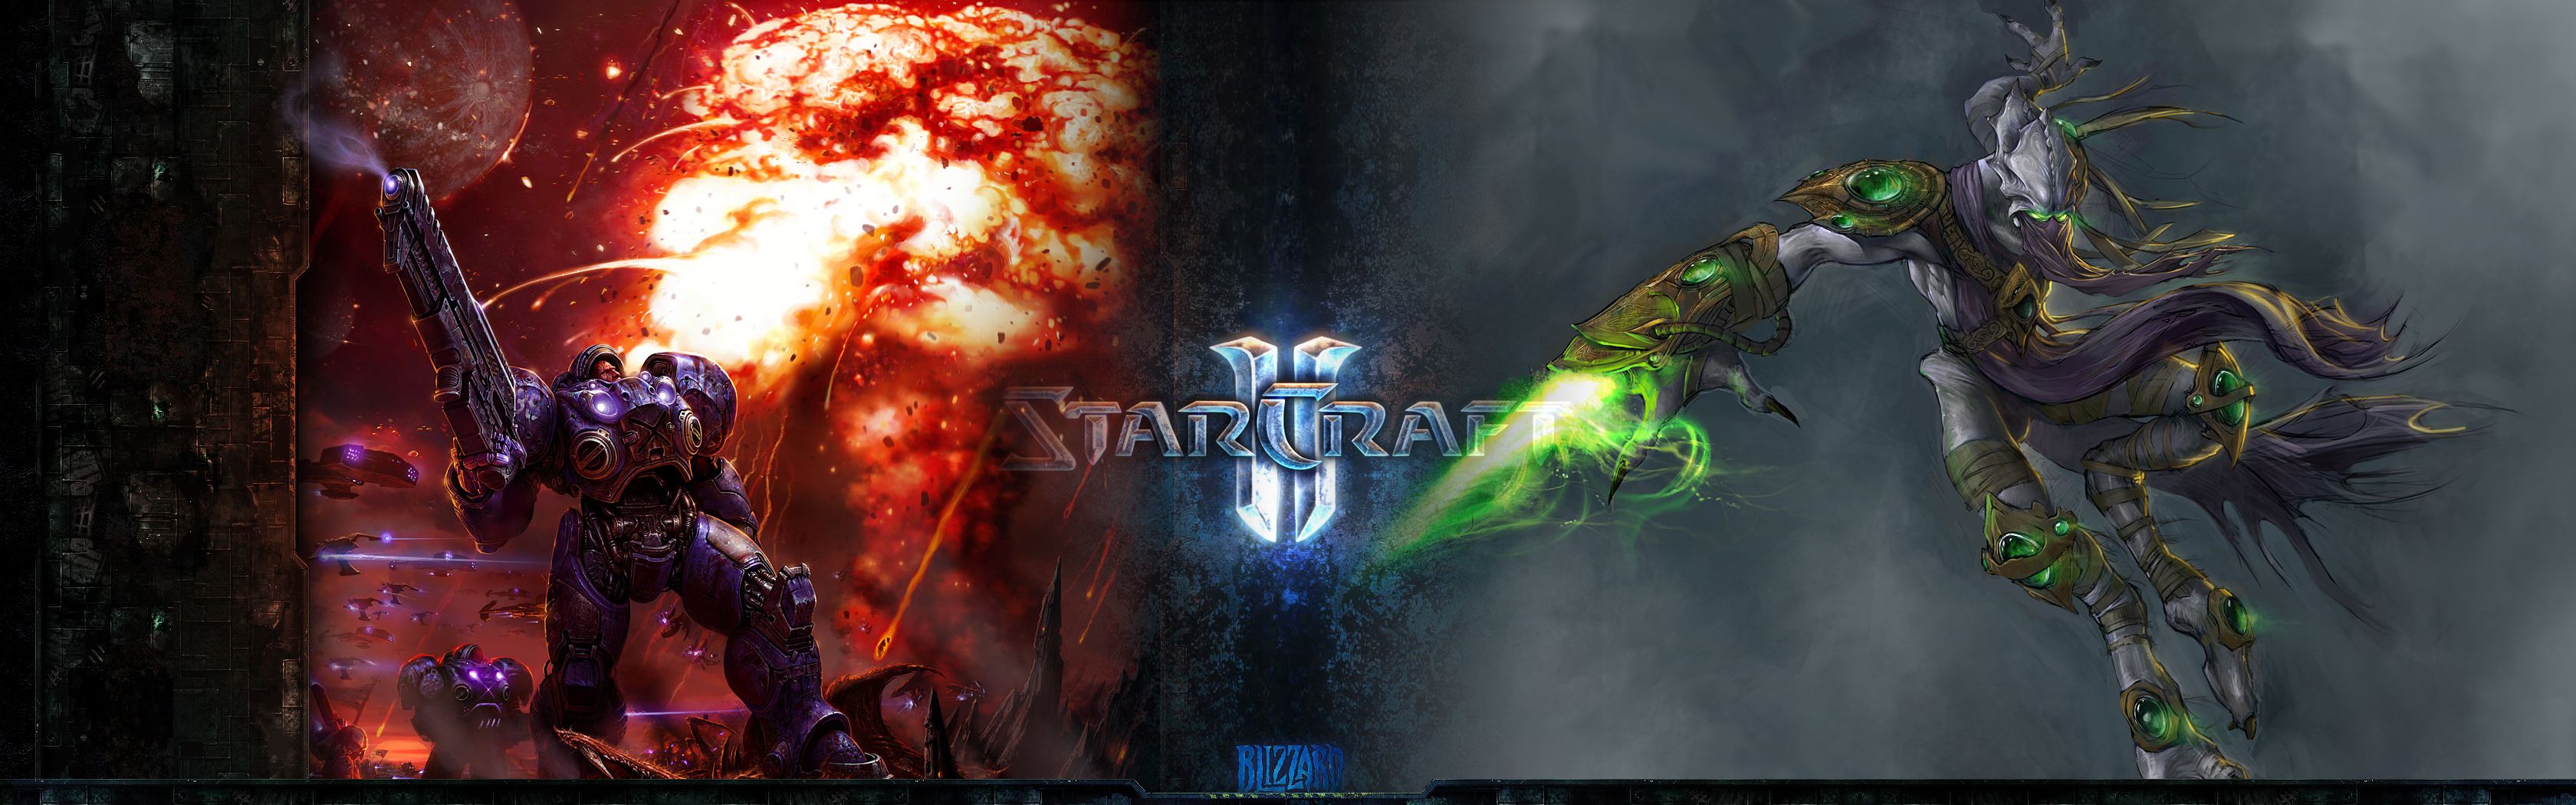 StarCraft II: Heart of the Swarm Art